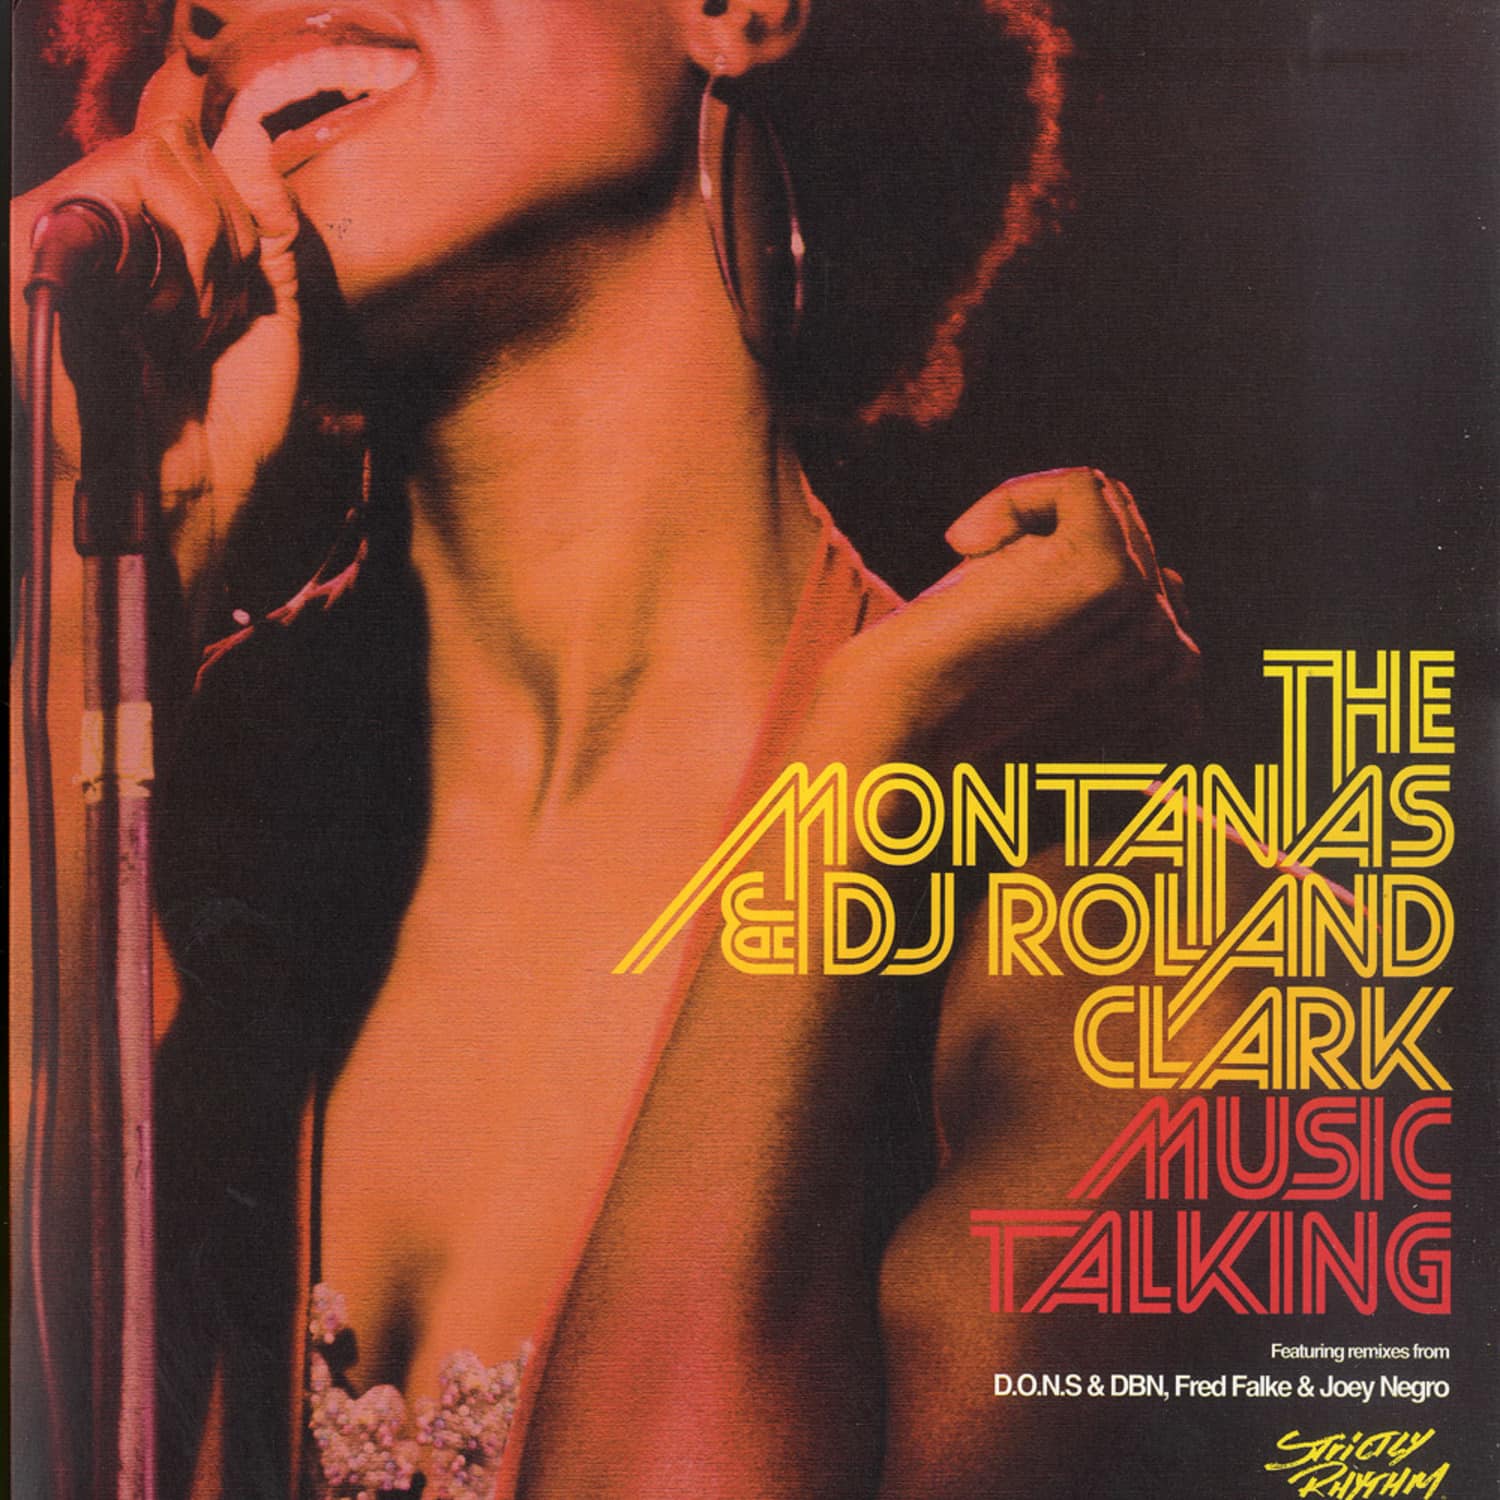 The Montanas & DJ Roland Clark - MUSIC TALKING